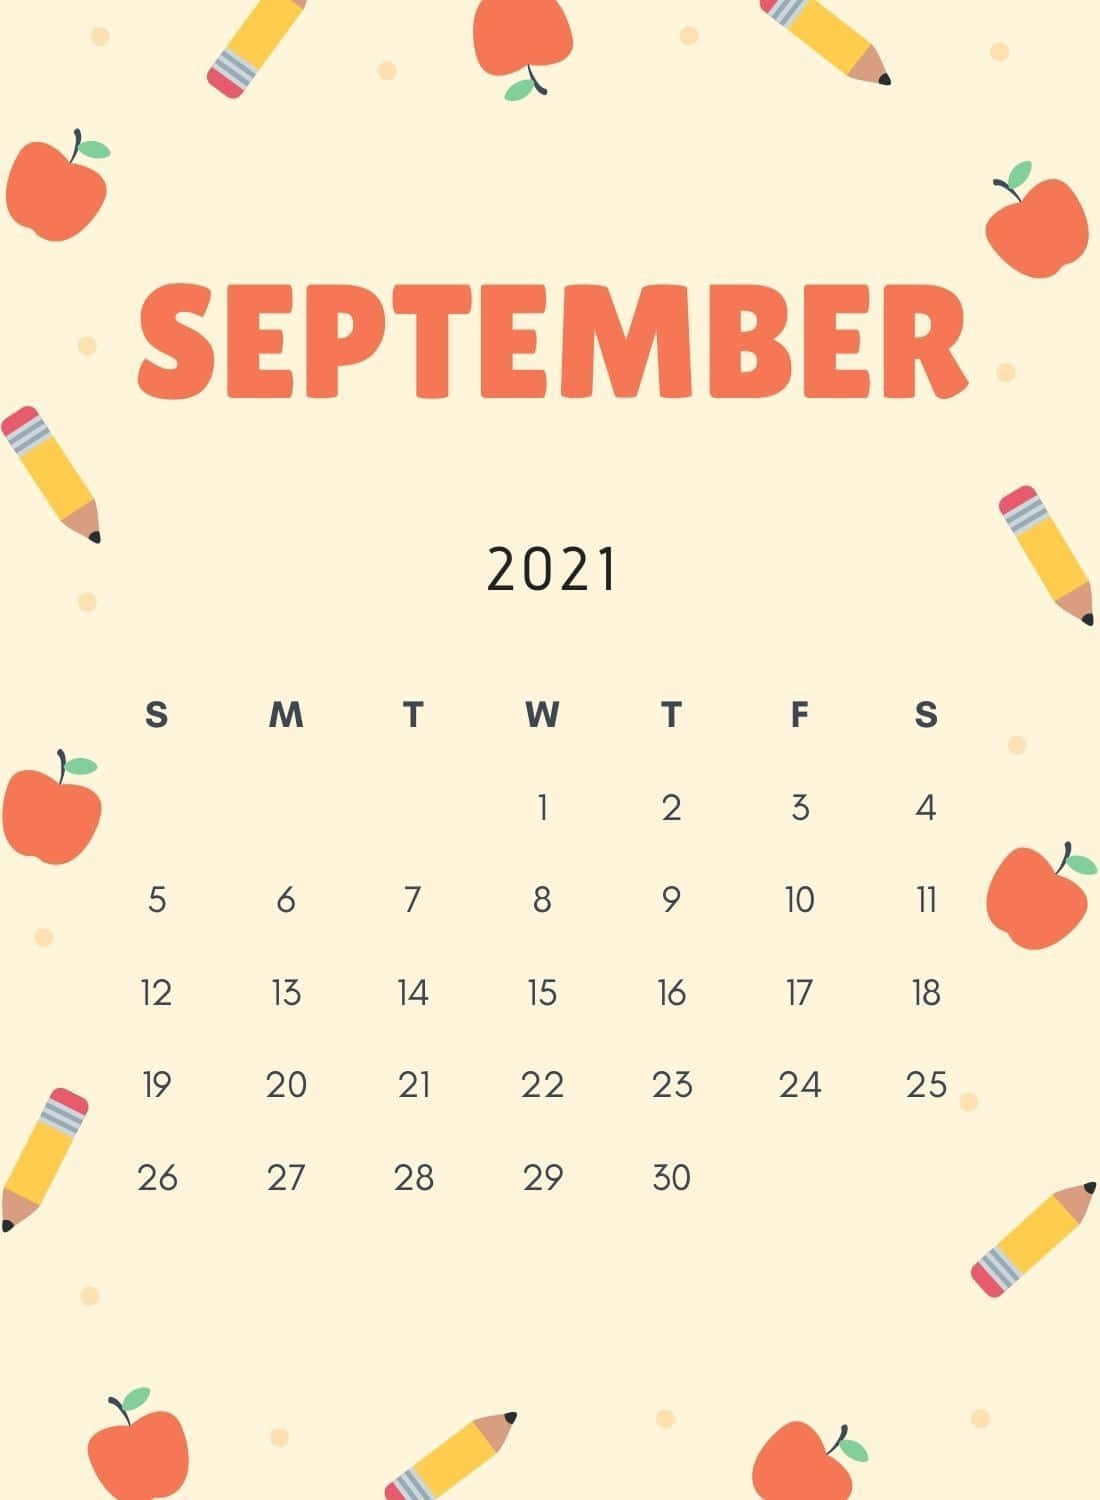 September 2021 Calendar Apples And Pencils Wallpaper